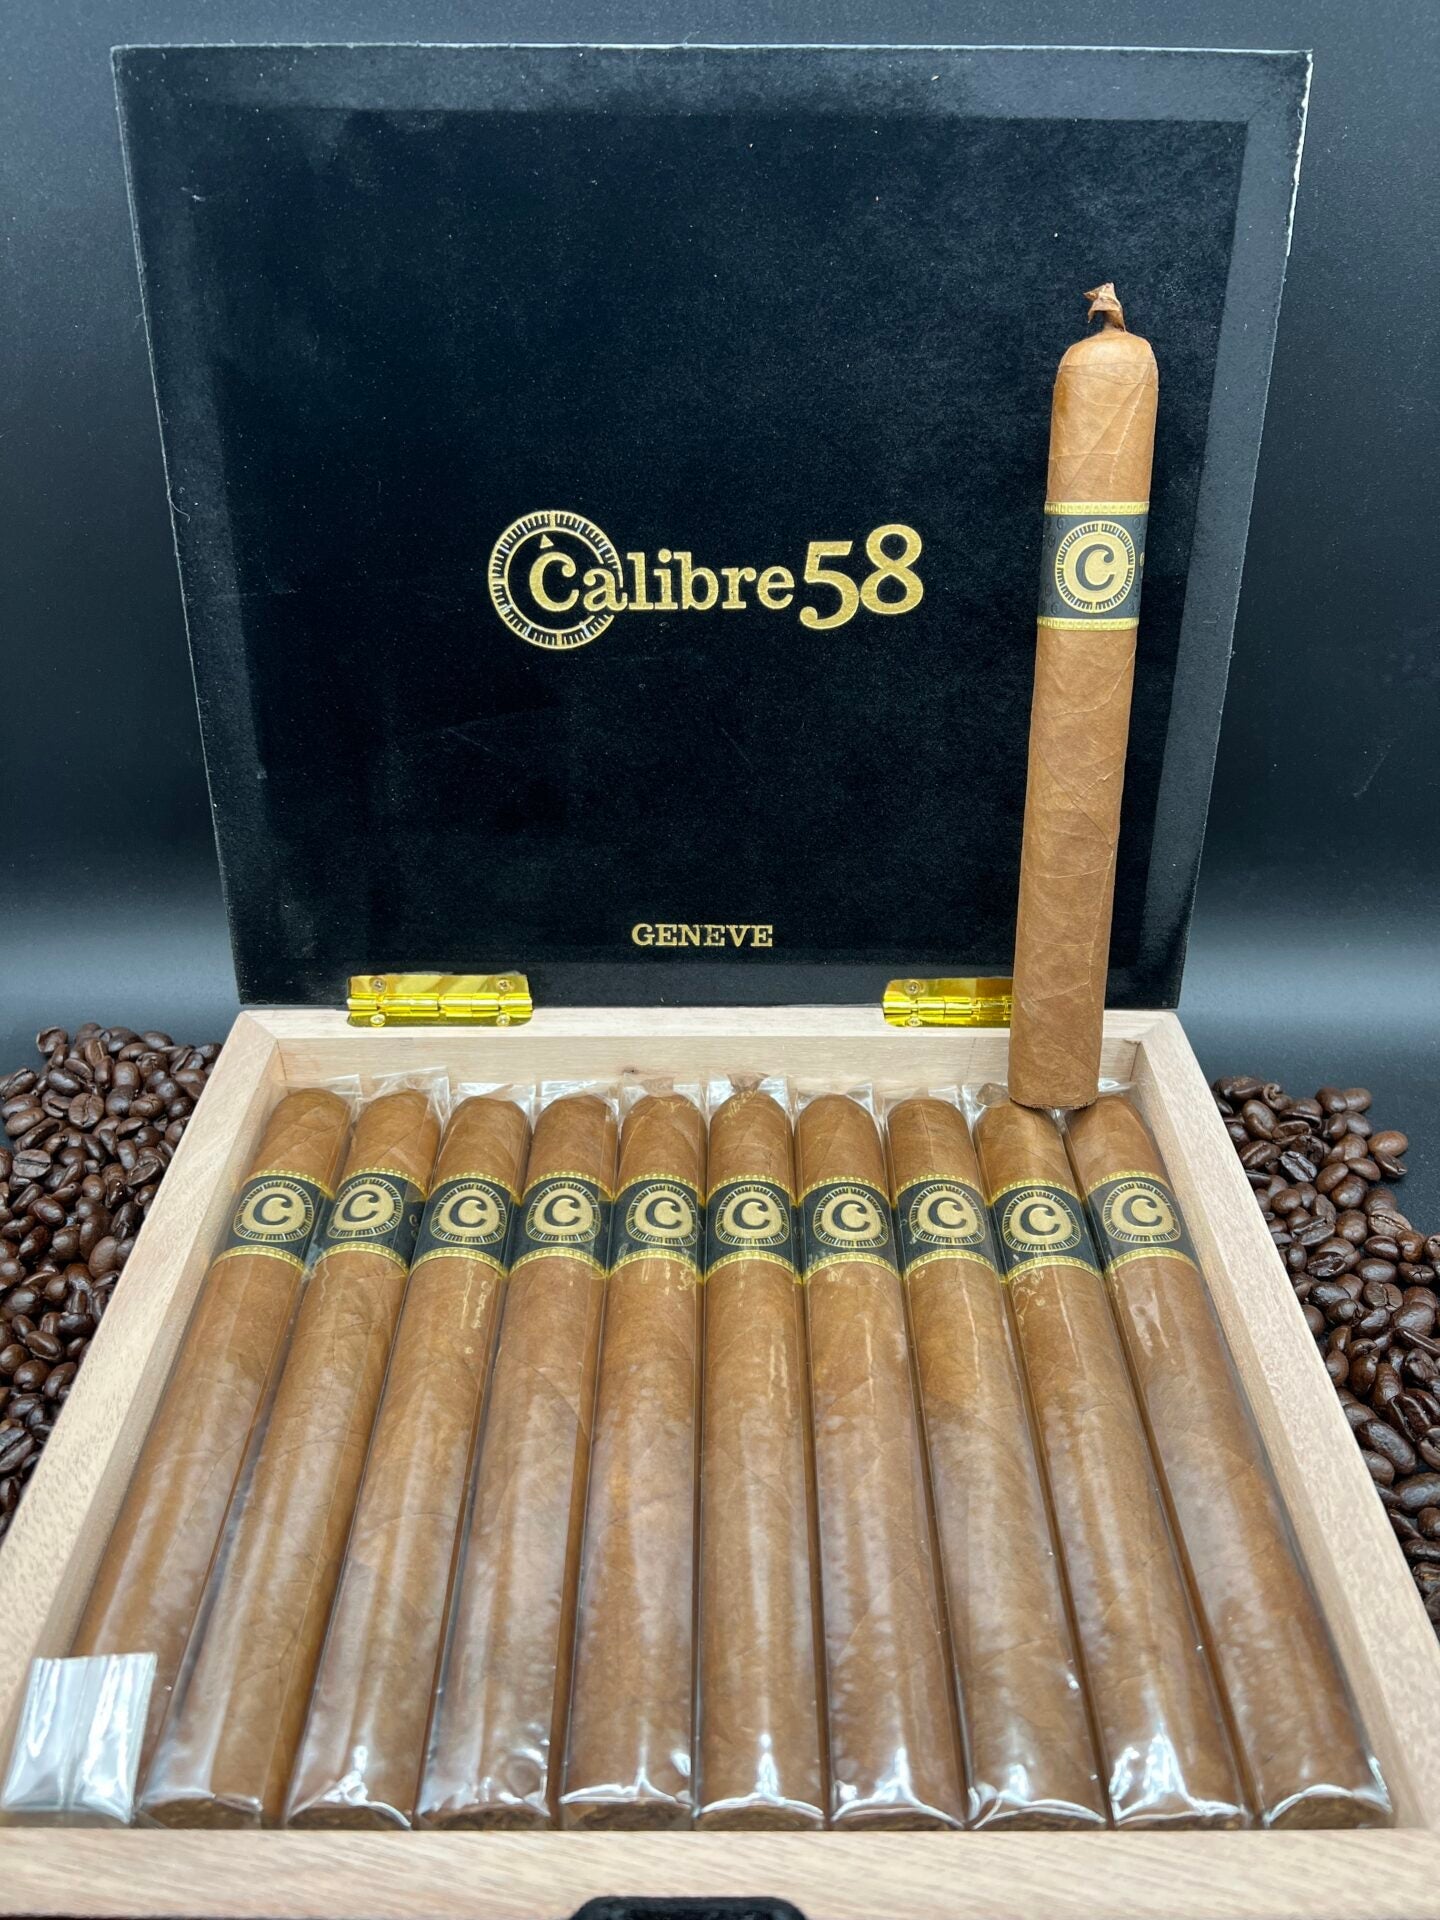 Calibre Geneve - Calibre 58 cigars supplied by Sir Louis Cigars